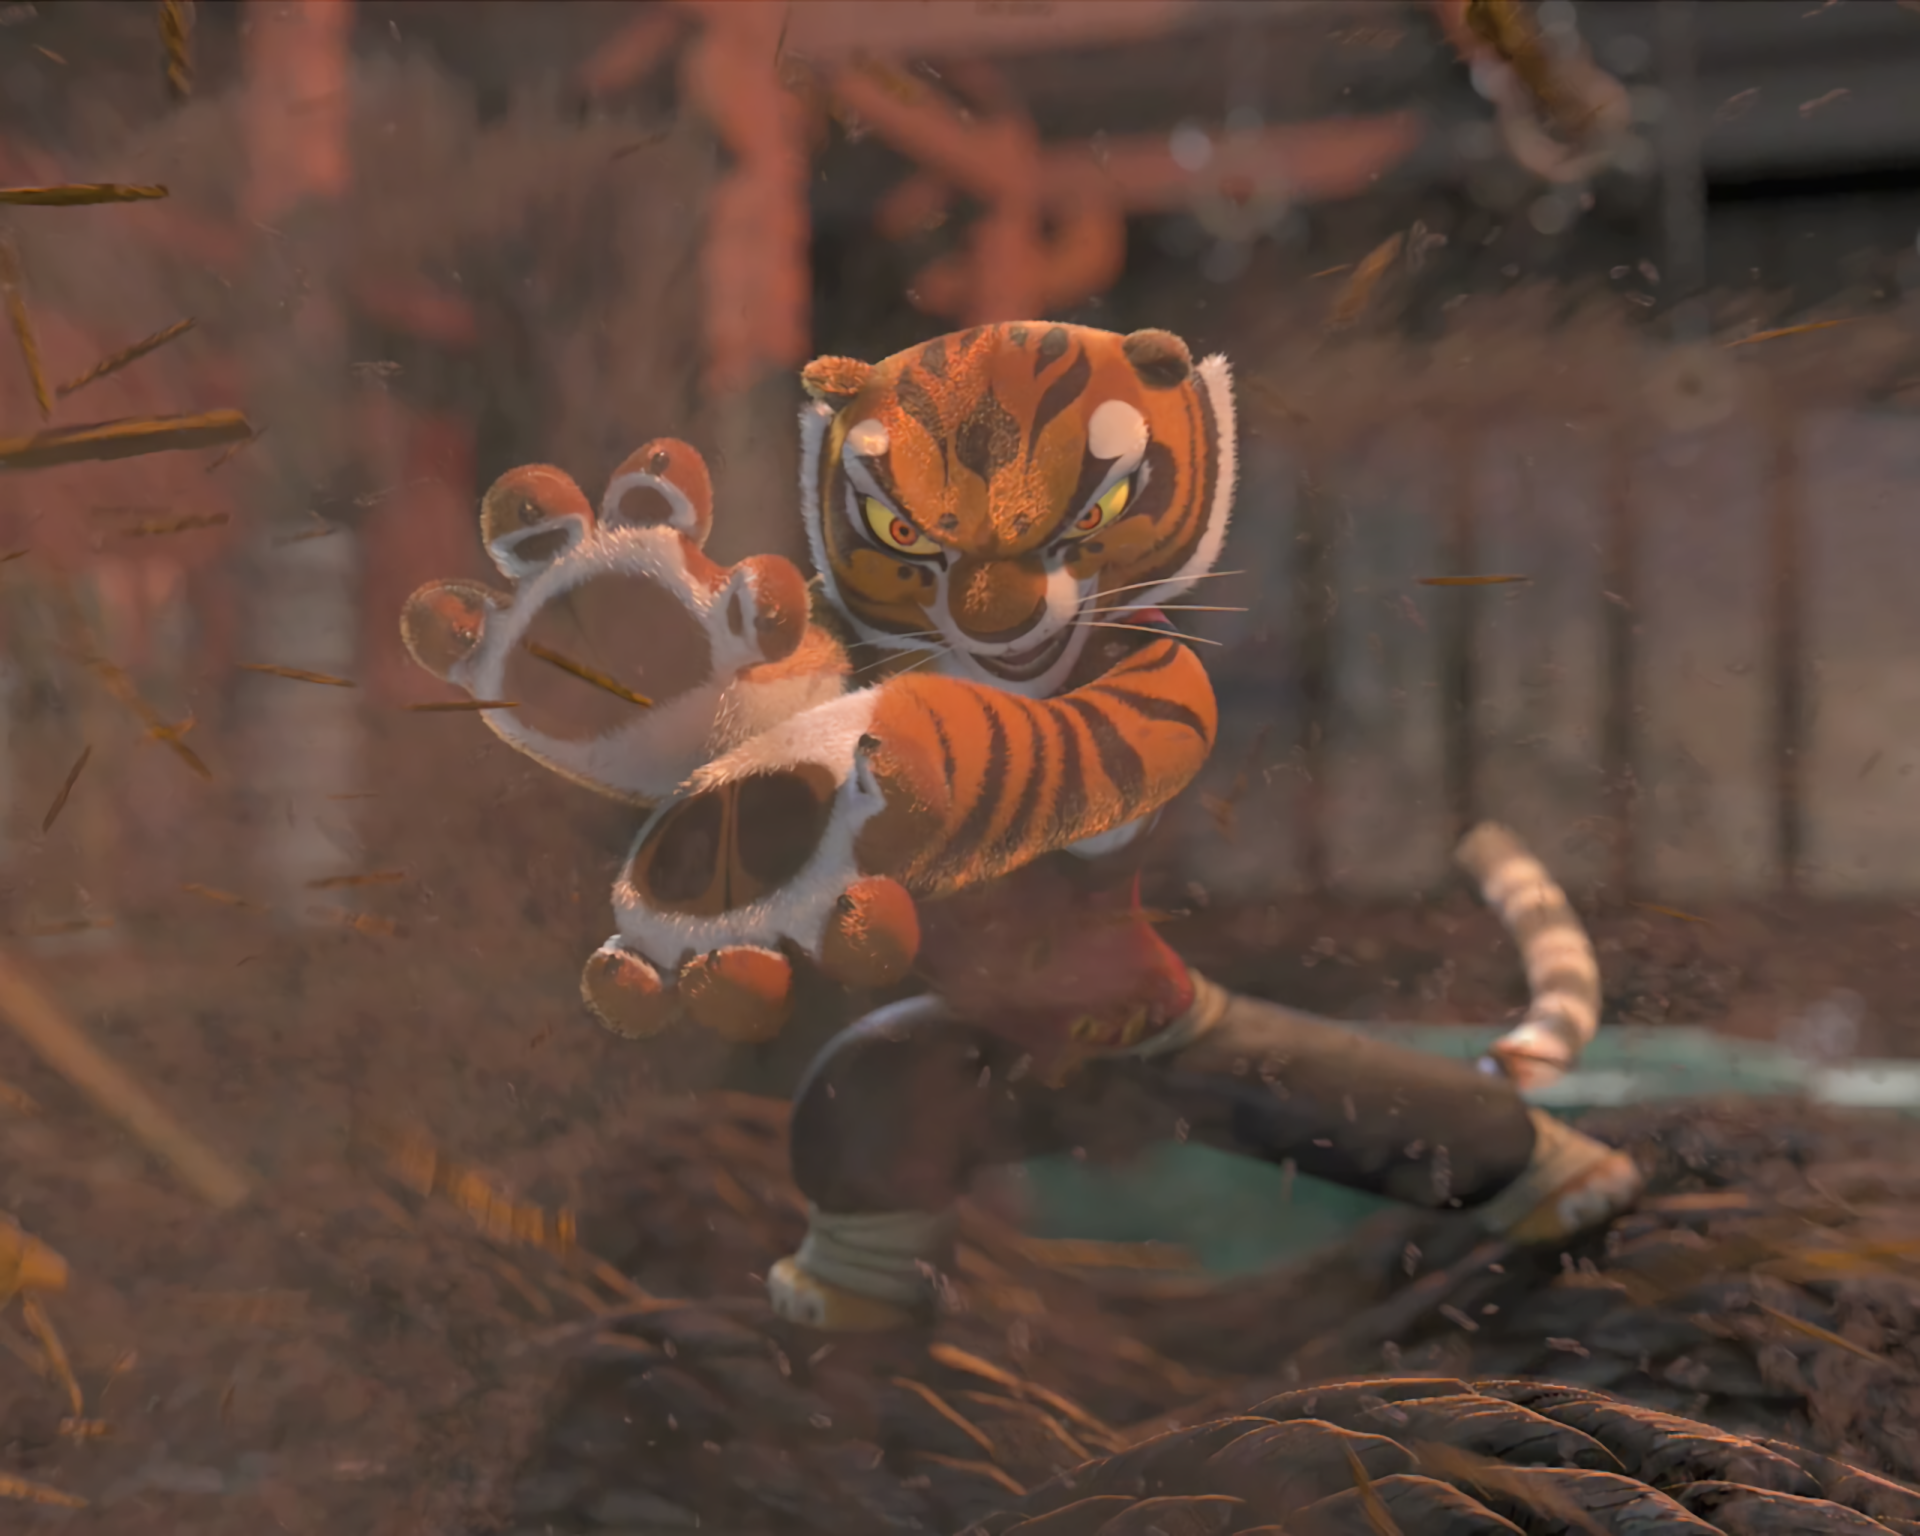 Tigress from Kung Fu Panda in a striking pose on a high-quality desktop wallpaper.